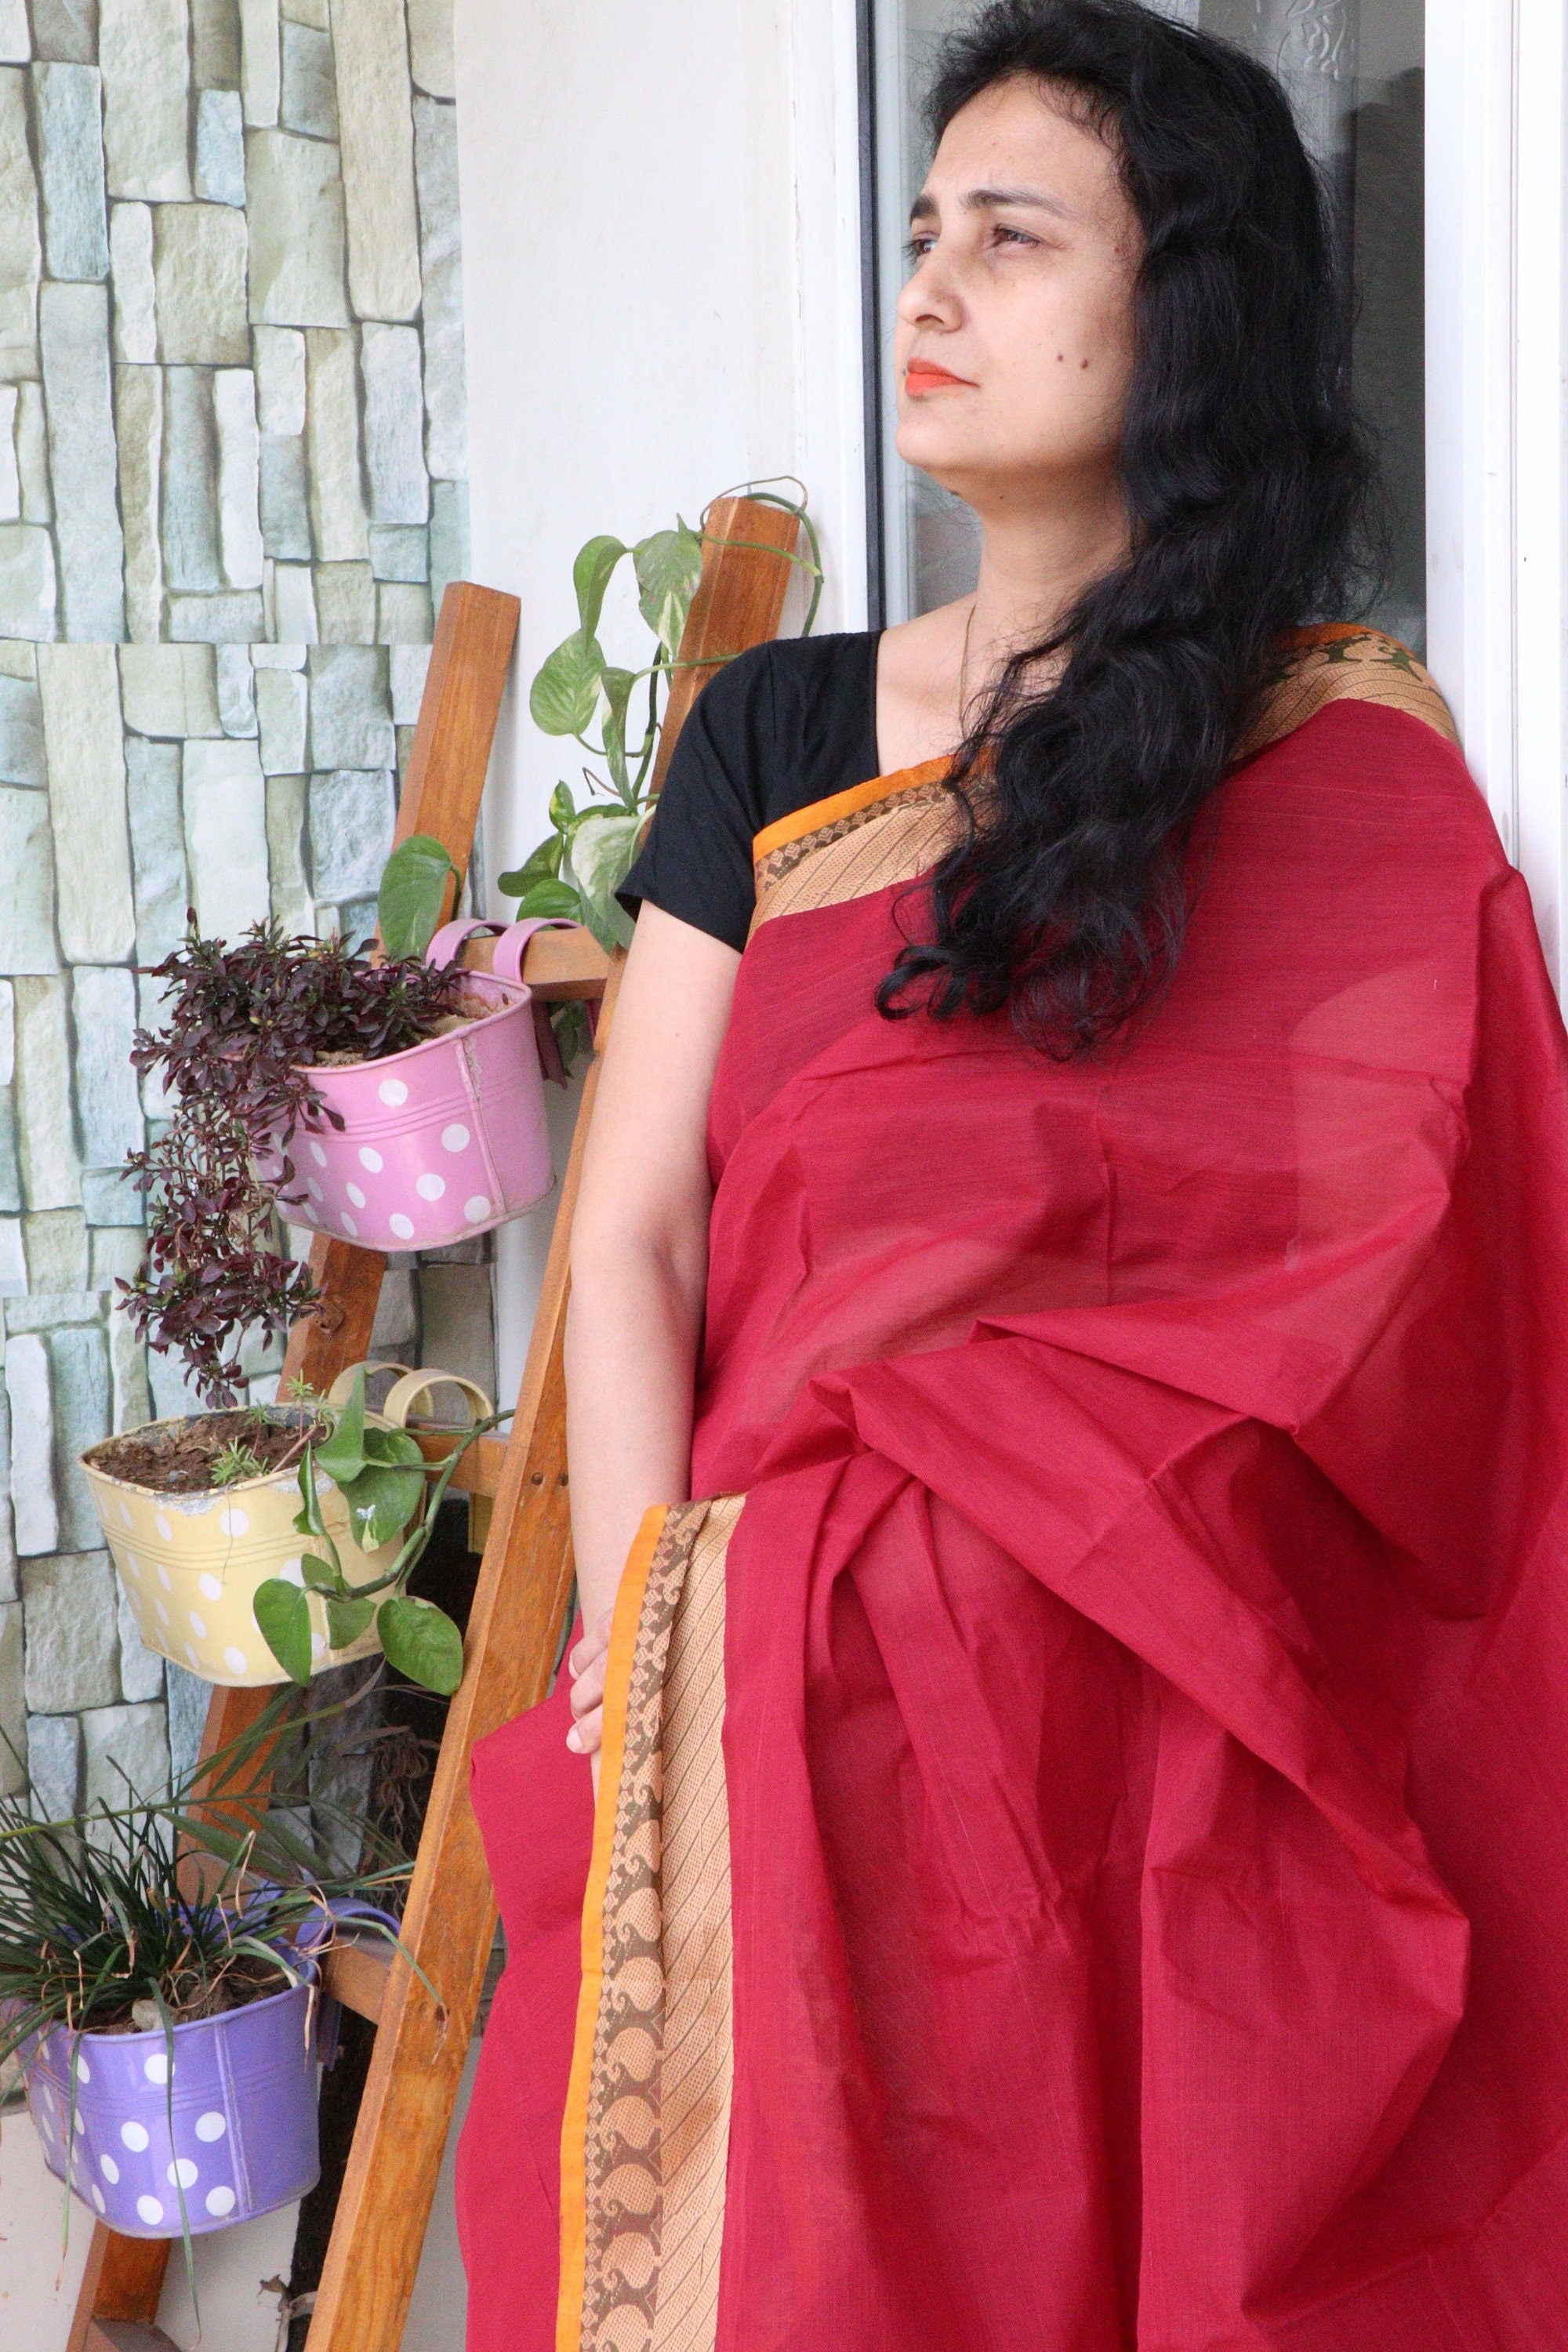 Saree - Cotton Handloom/Handwoven Tant - Sindoor Red - Sari/Indian Dress/Fabric Yard